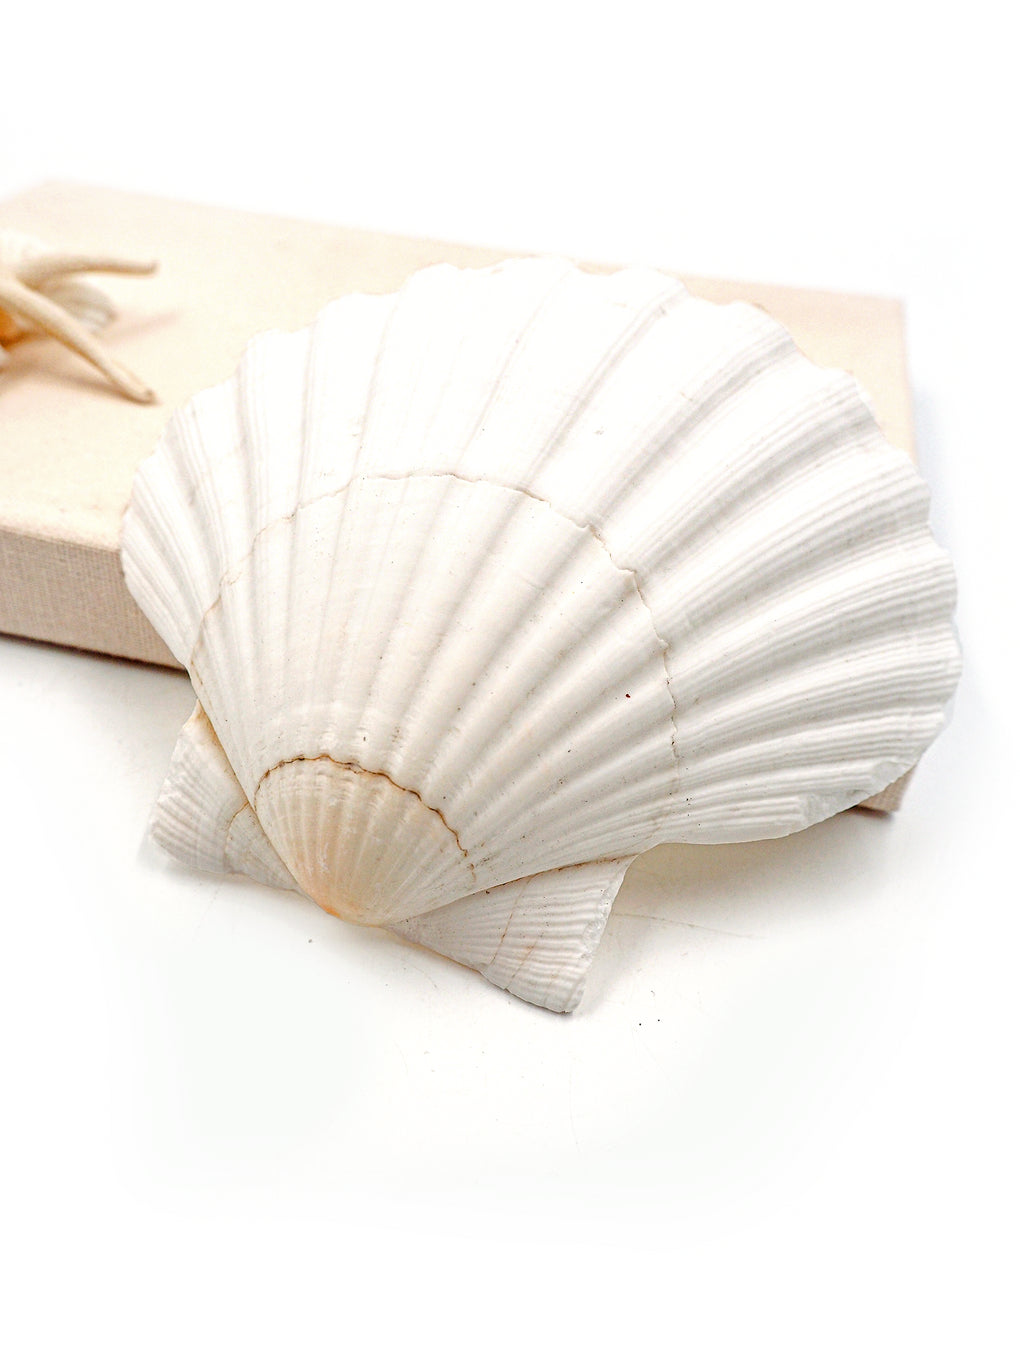 Baby Flat Scallop Shell-Bulk - Seashell Supplies - Scallop Shells